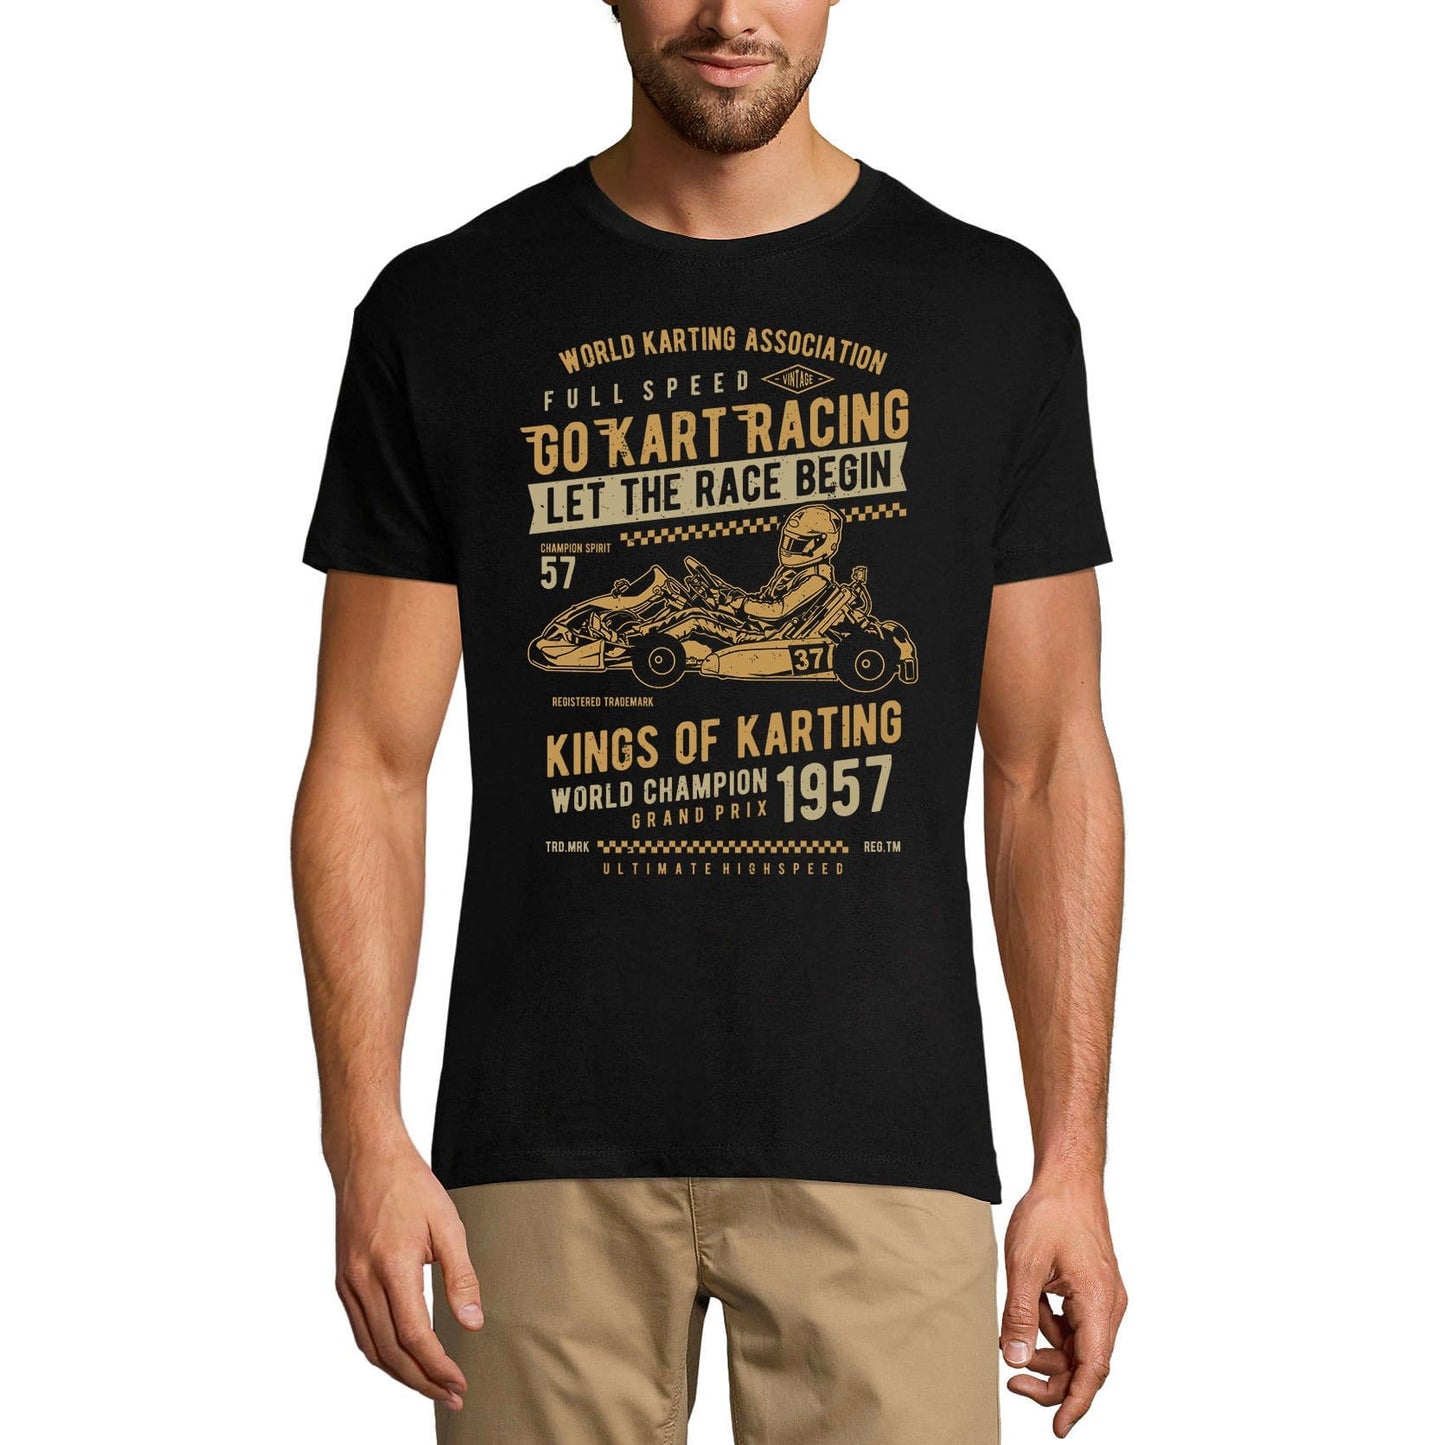 ULTRABASIC Men's Graphic T-Shirt Go Kart Racing - Kings of Karting Racer Tee Shirt